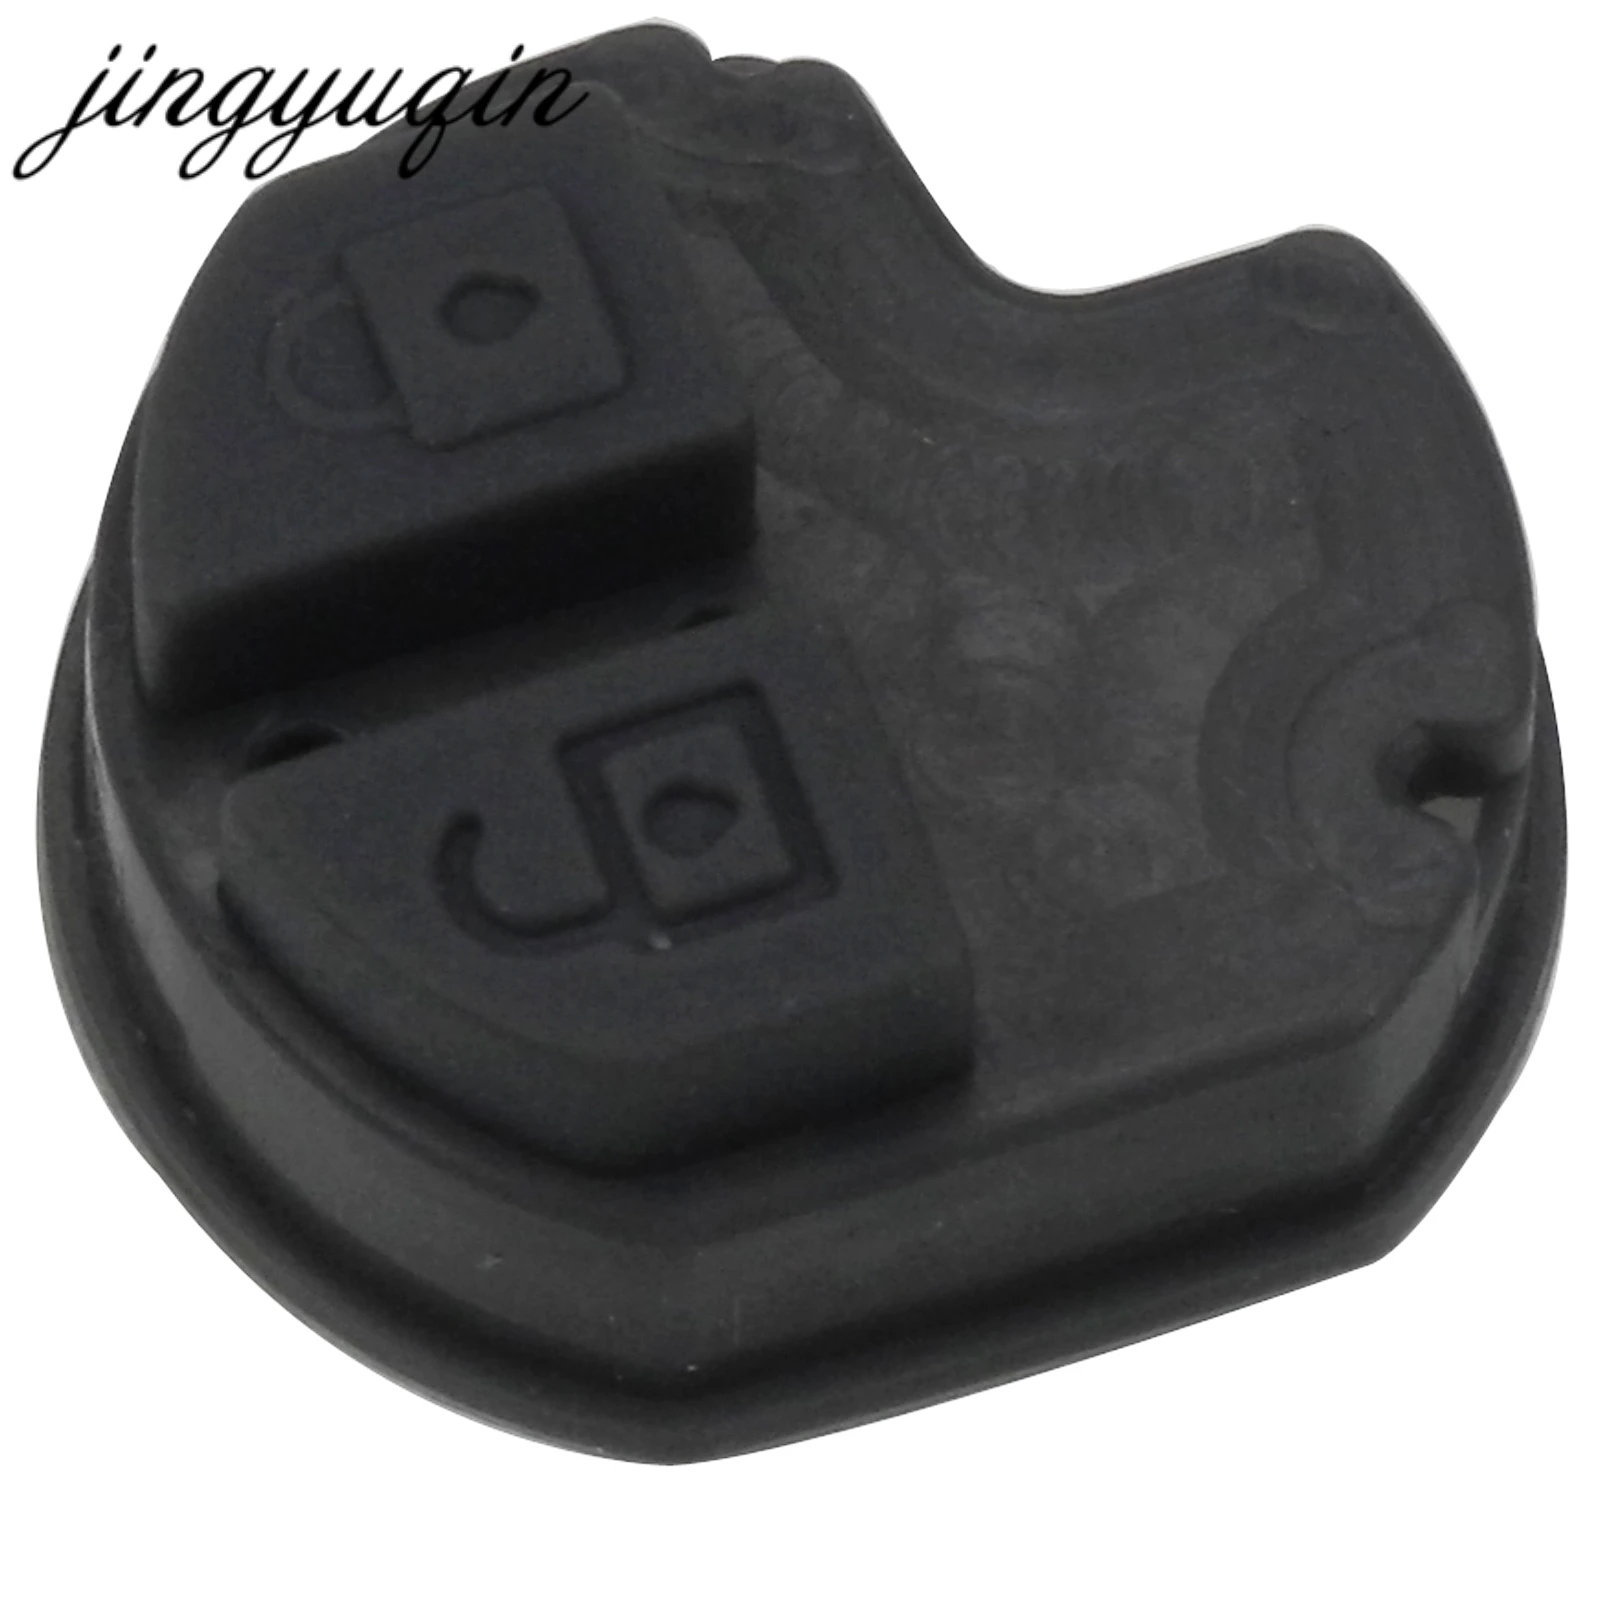 Jingyuqin 2pcs/lot Rubber Pad Remote Car Key Fob Shell Cover 2 Button Key Case Replace for SUZUKI Grand Vitara Swift Liana